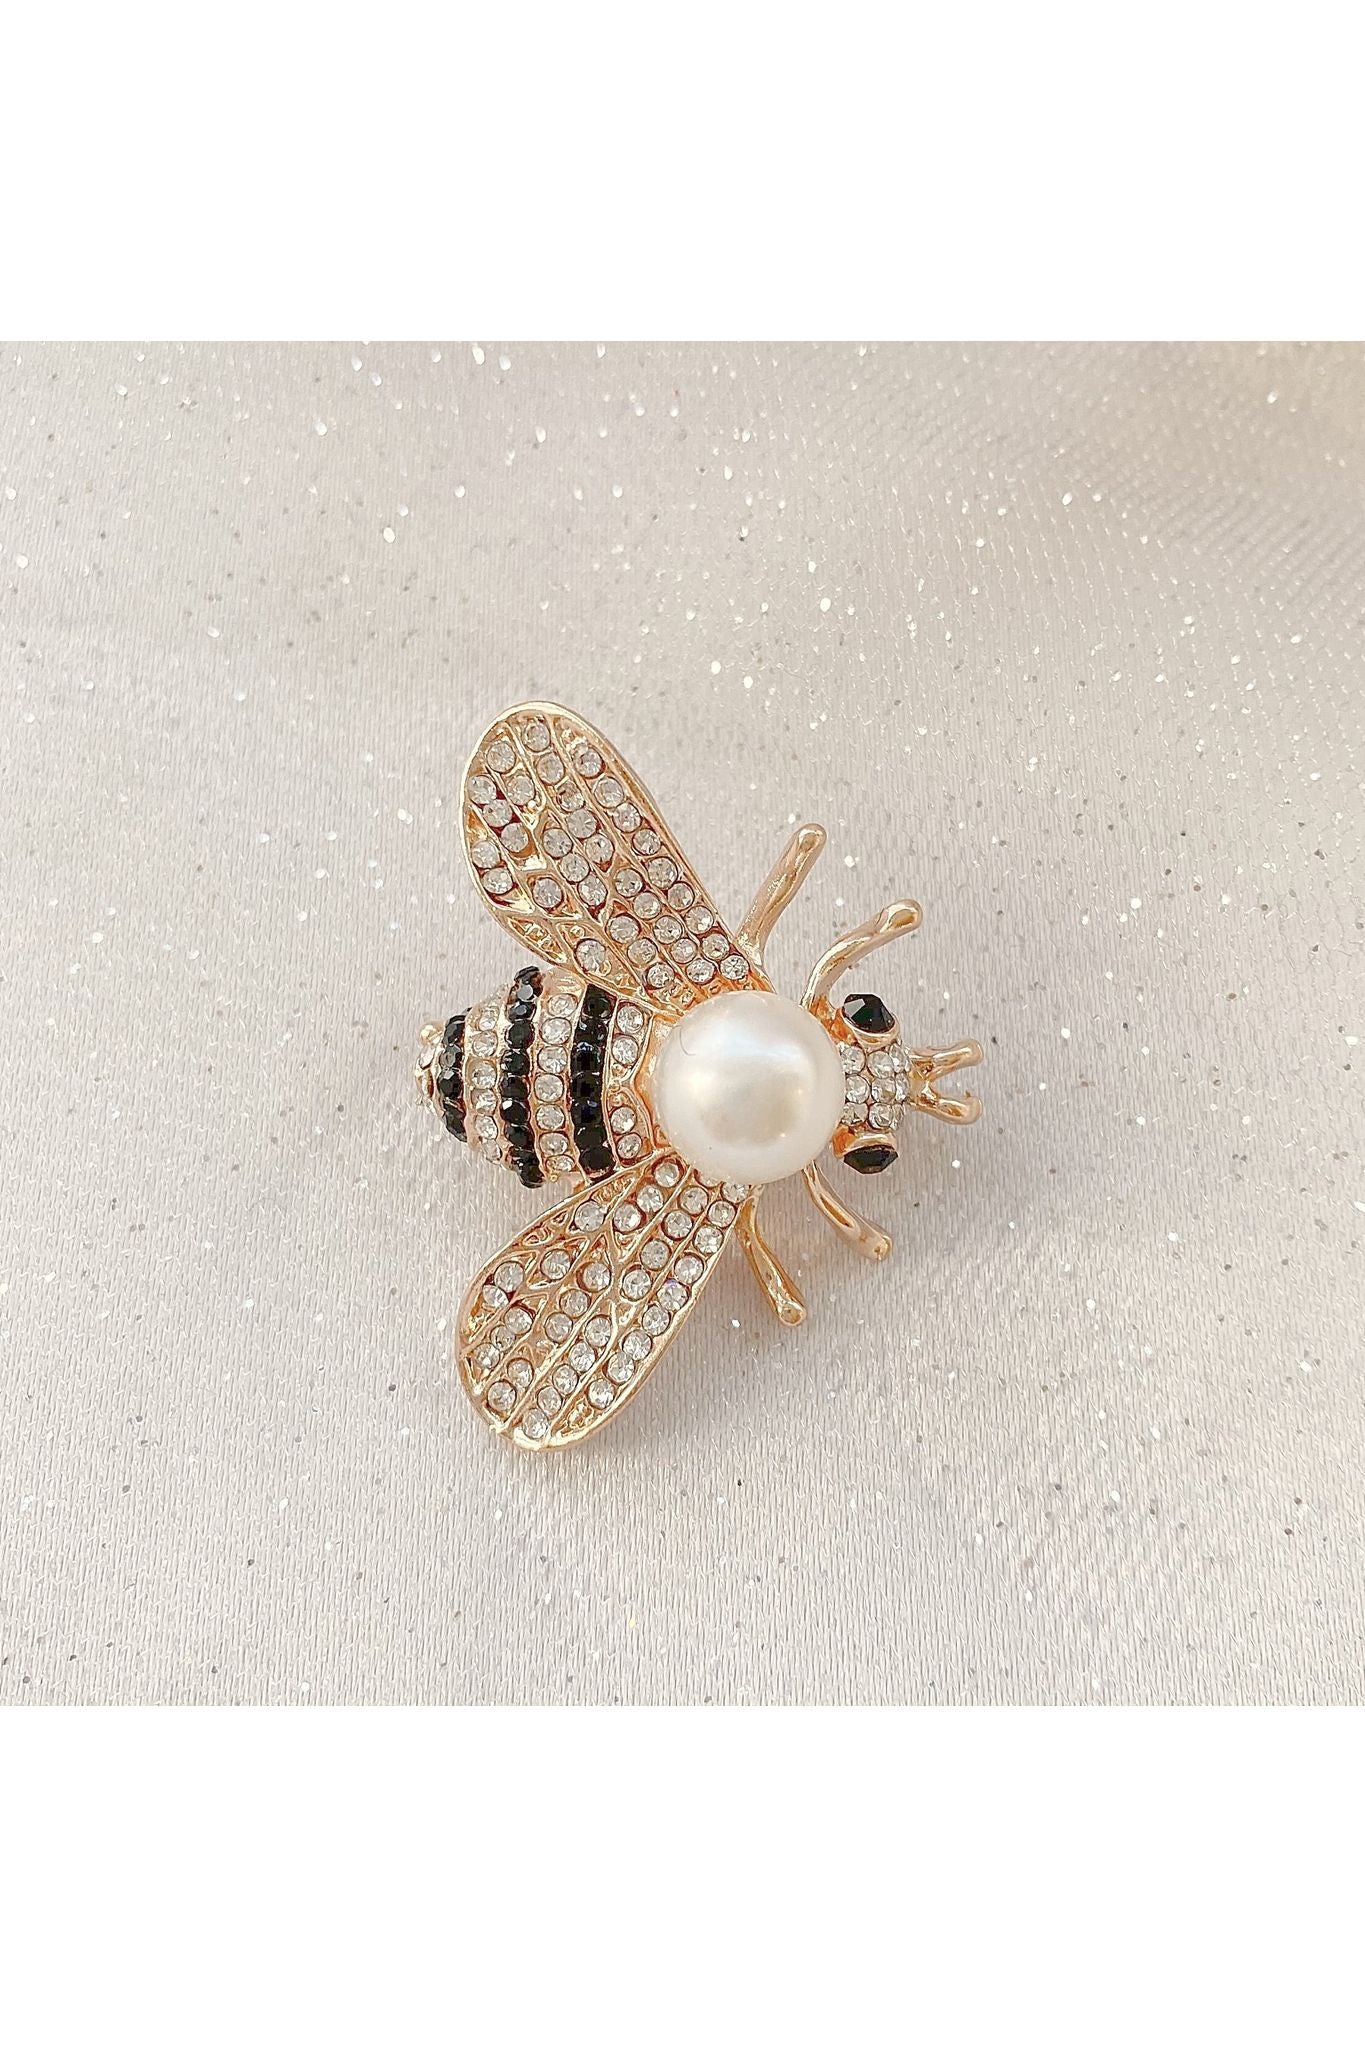 Bee Brooch Gold Pearl Pin Crystal 5060801171175